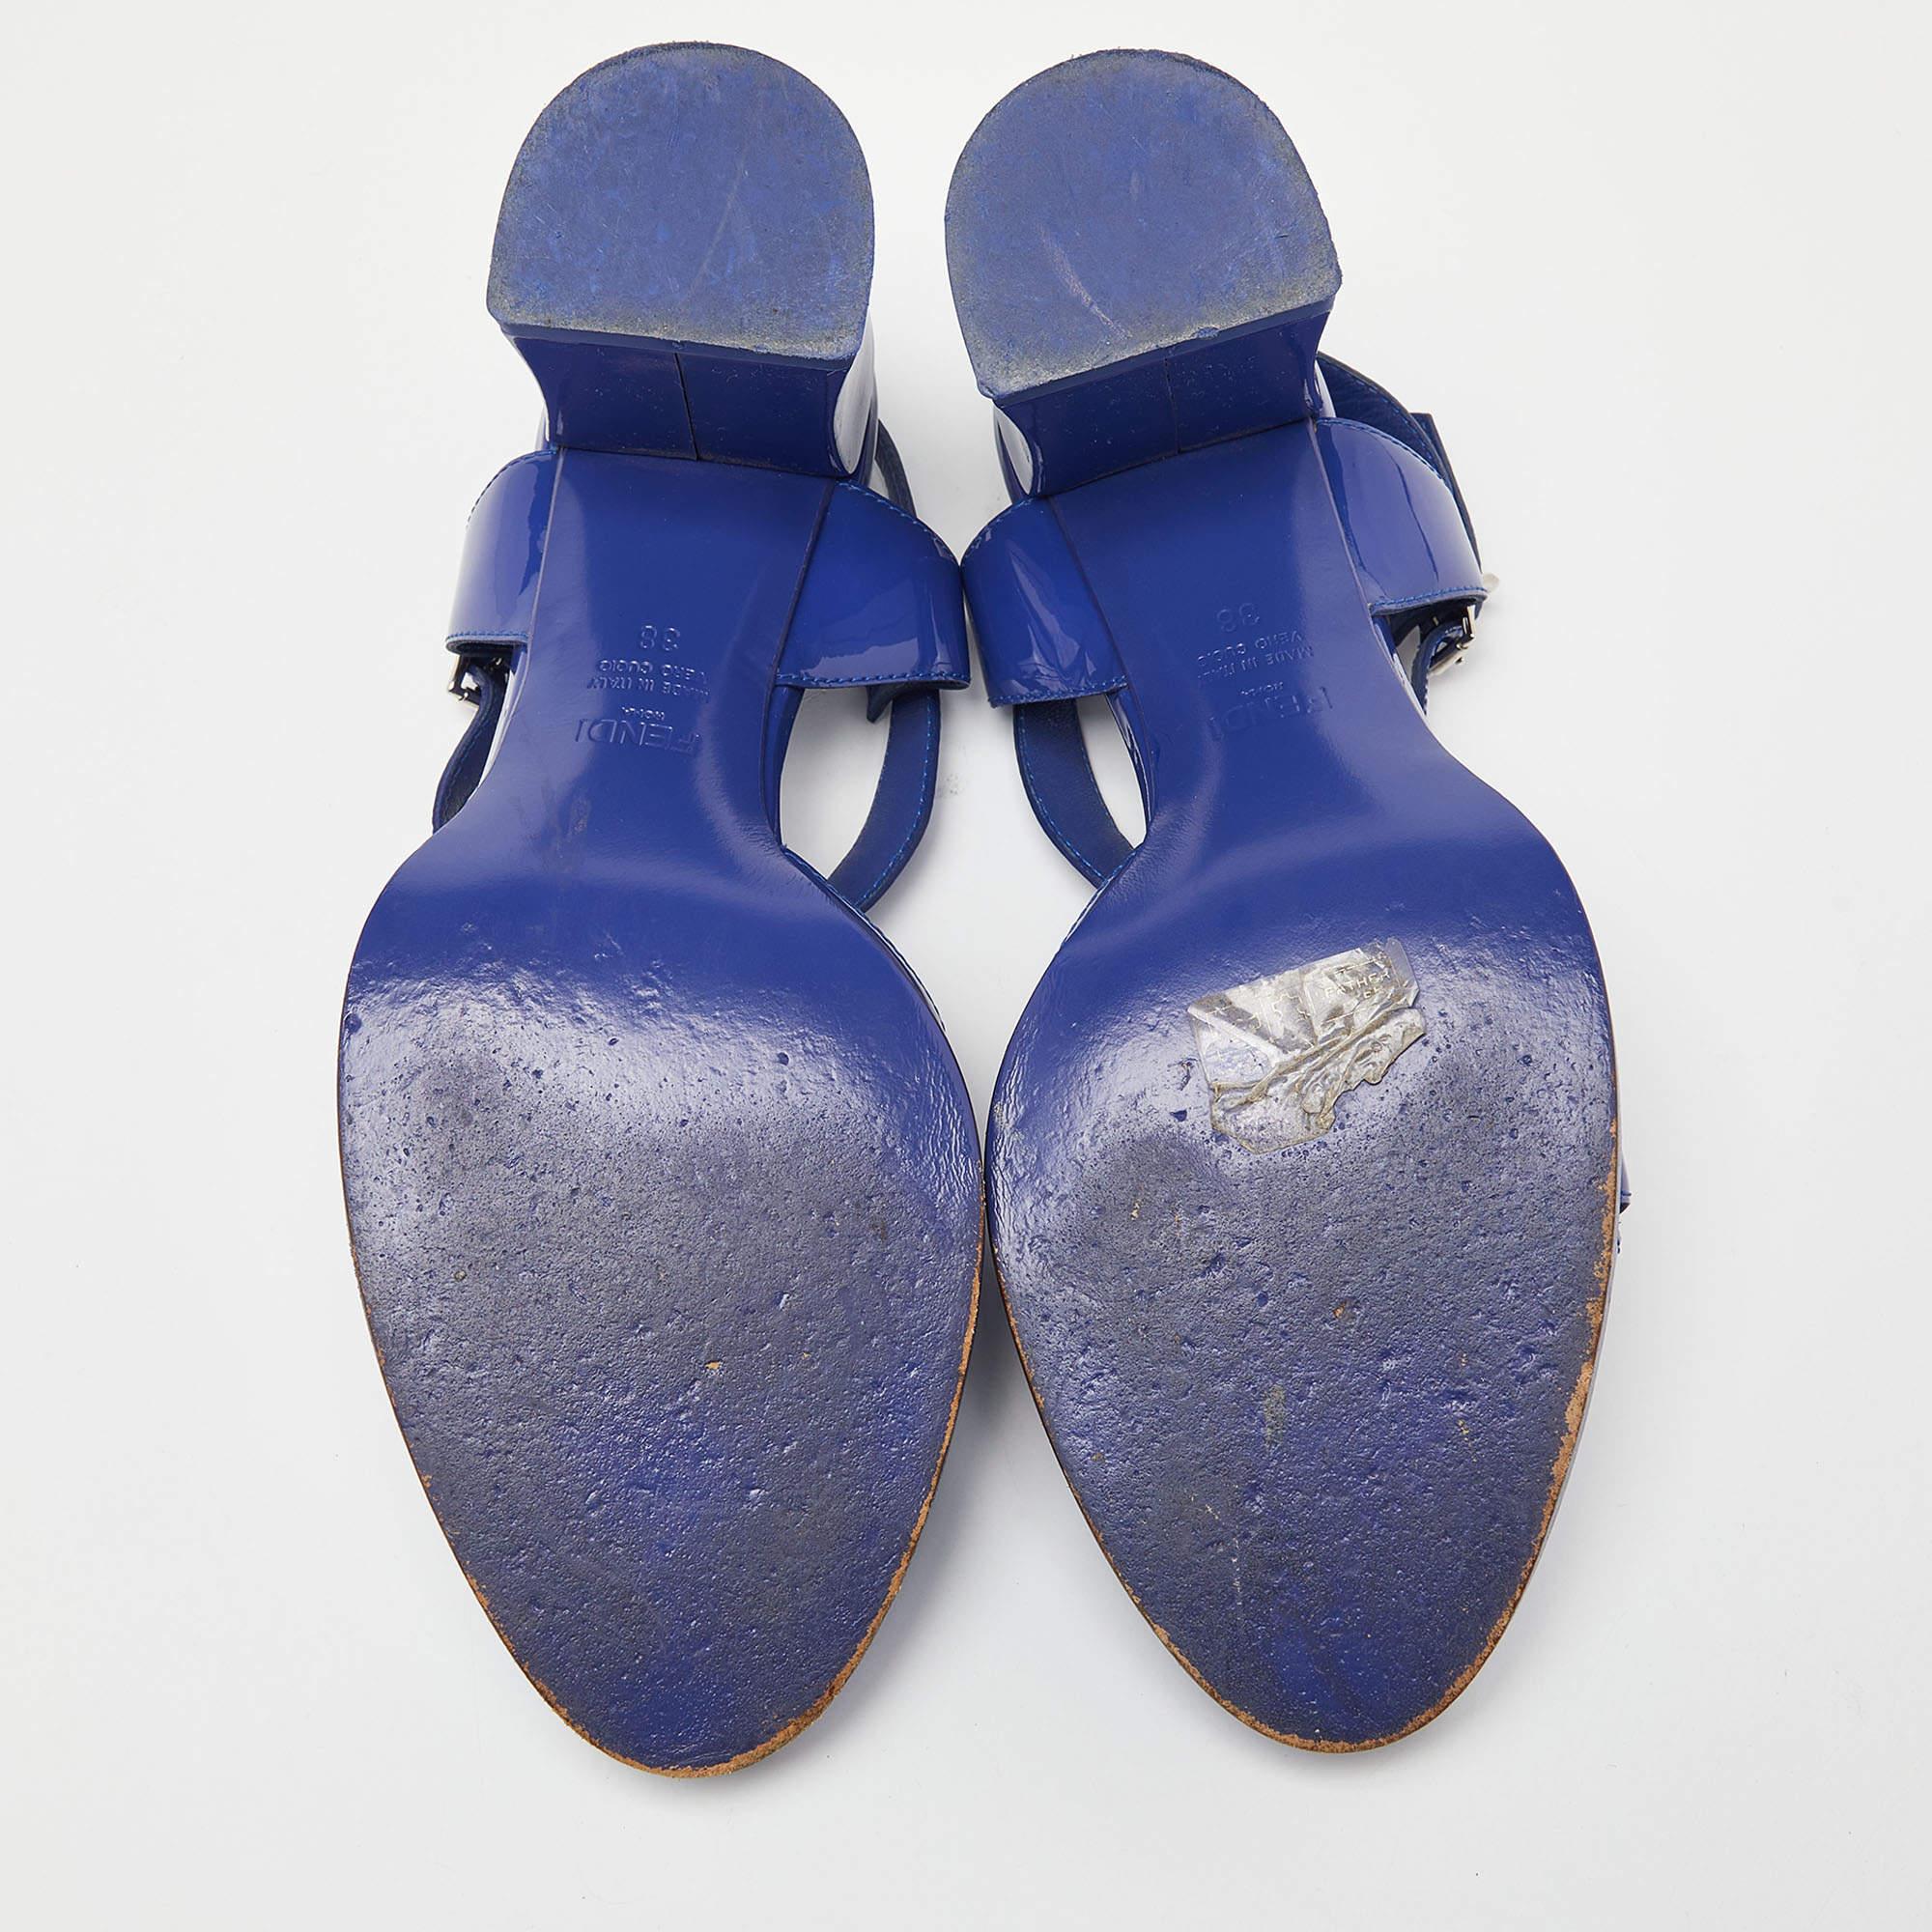 Fendi Blue Patent Leather Chameleon Block Heel Sandals Size 38 5